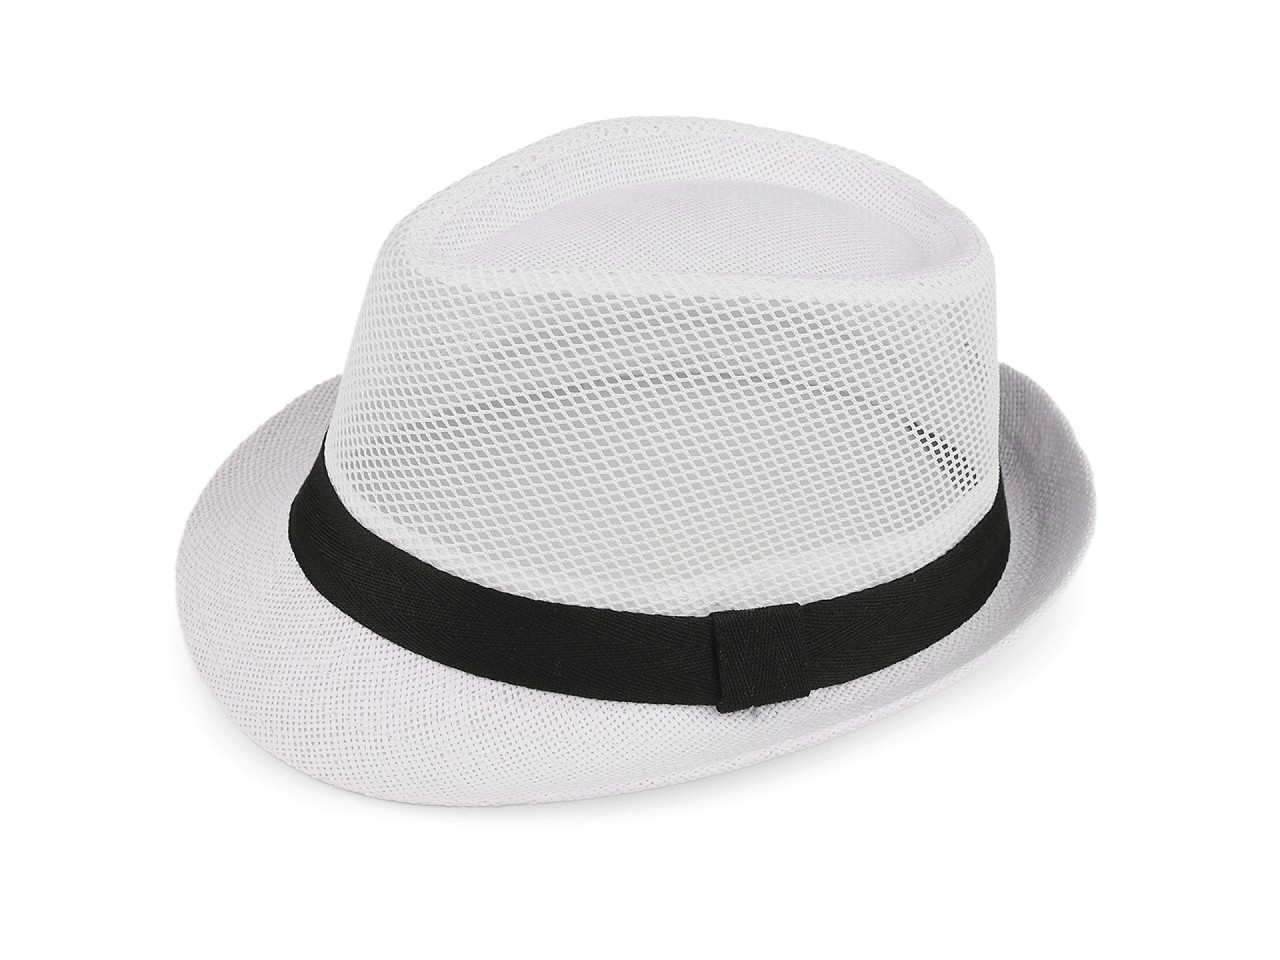 Letní klobouk / slamák unisex, barva 14 bílá